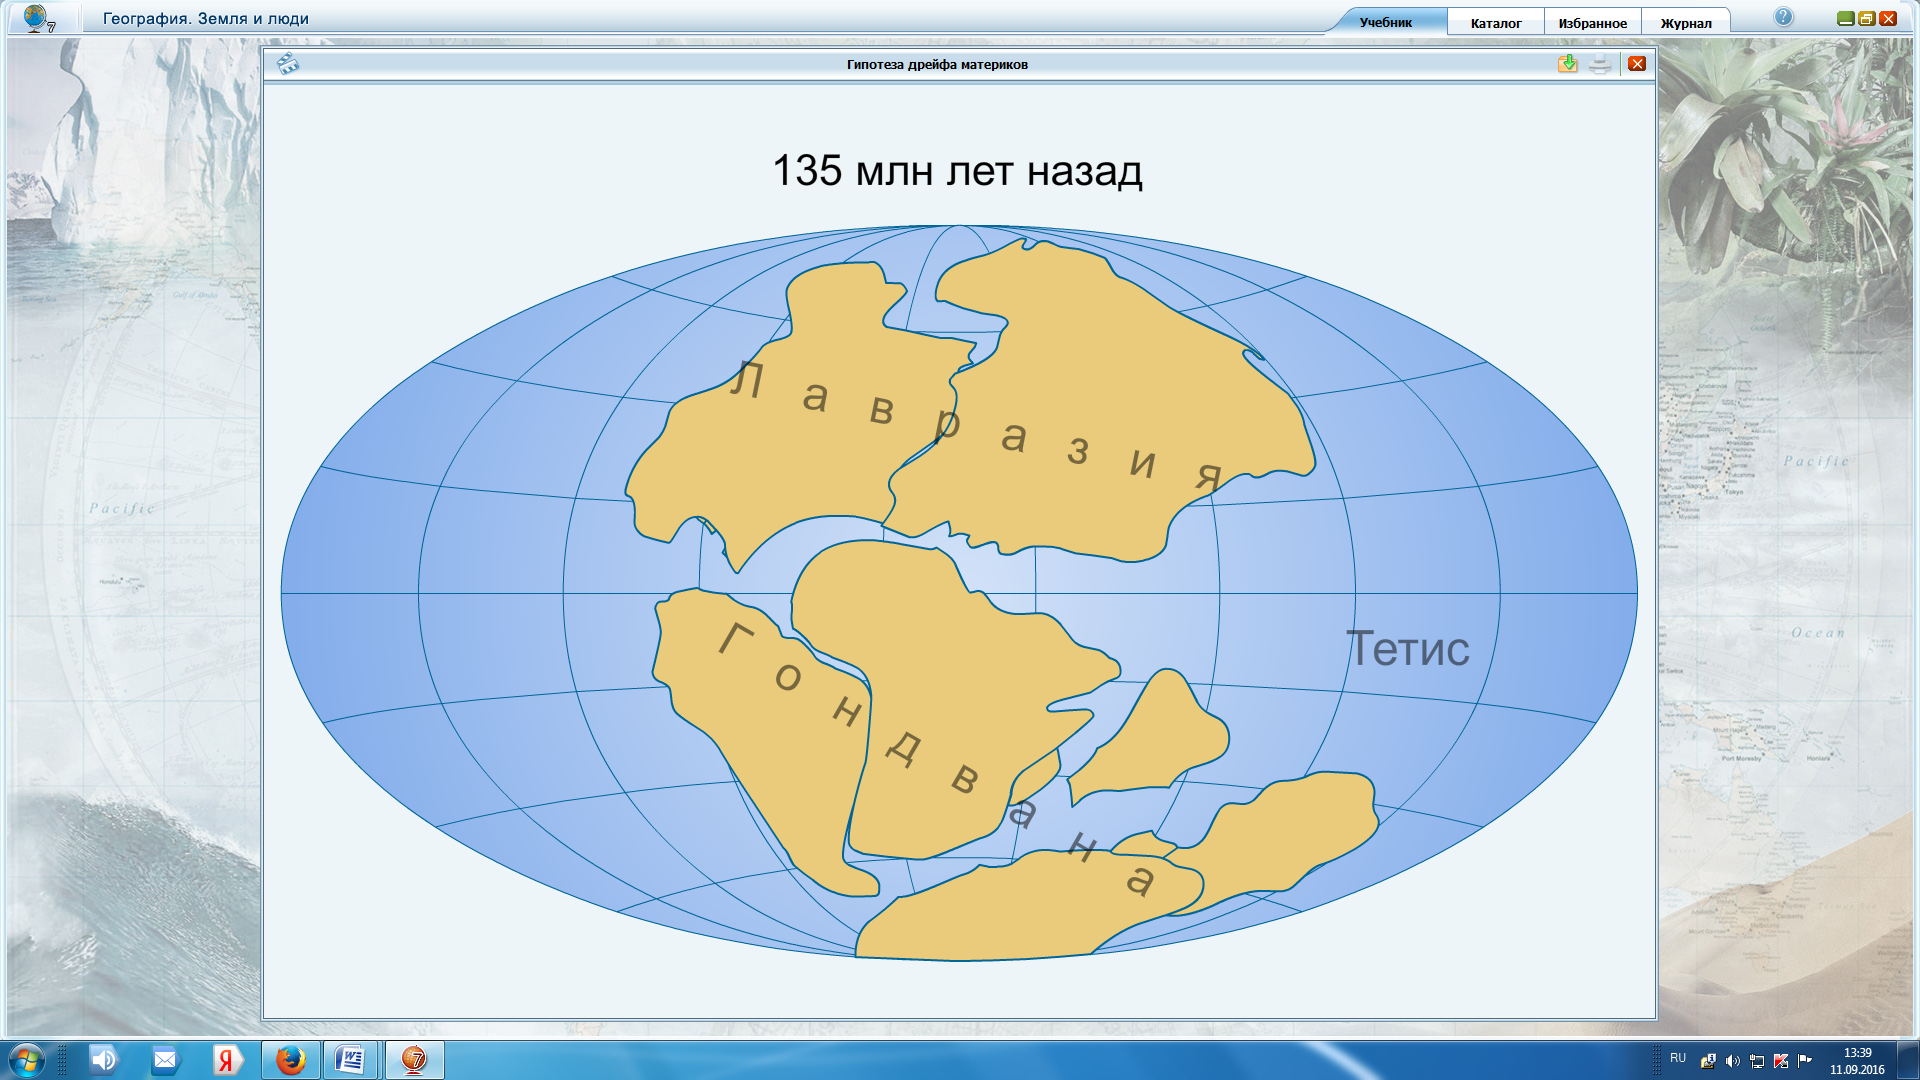 Материков 6 океанов 4. Местоположение материков. Название материков и их расположение. Современное положение материков. Расположение материков на карте.